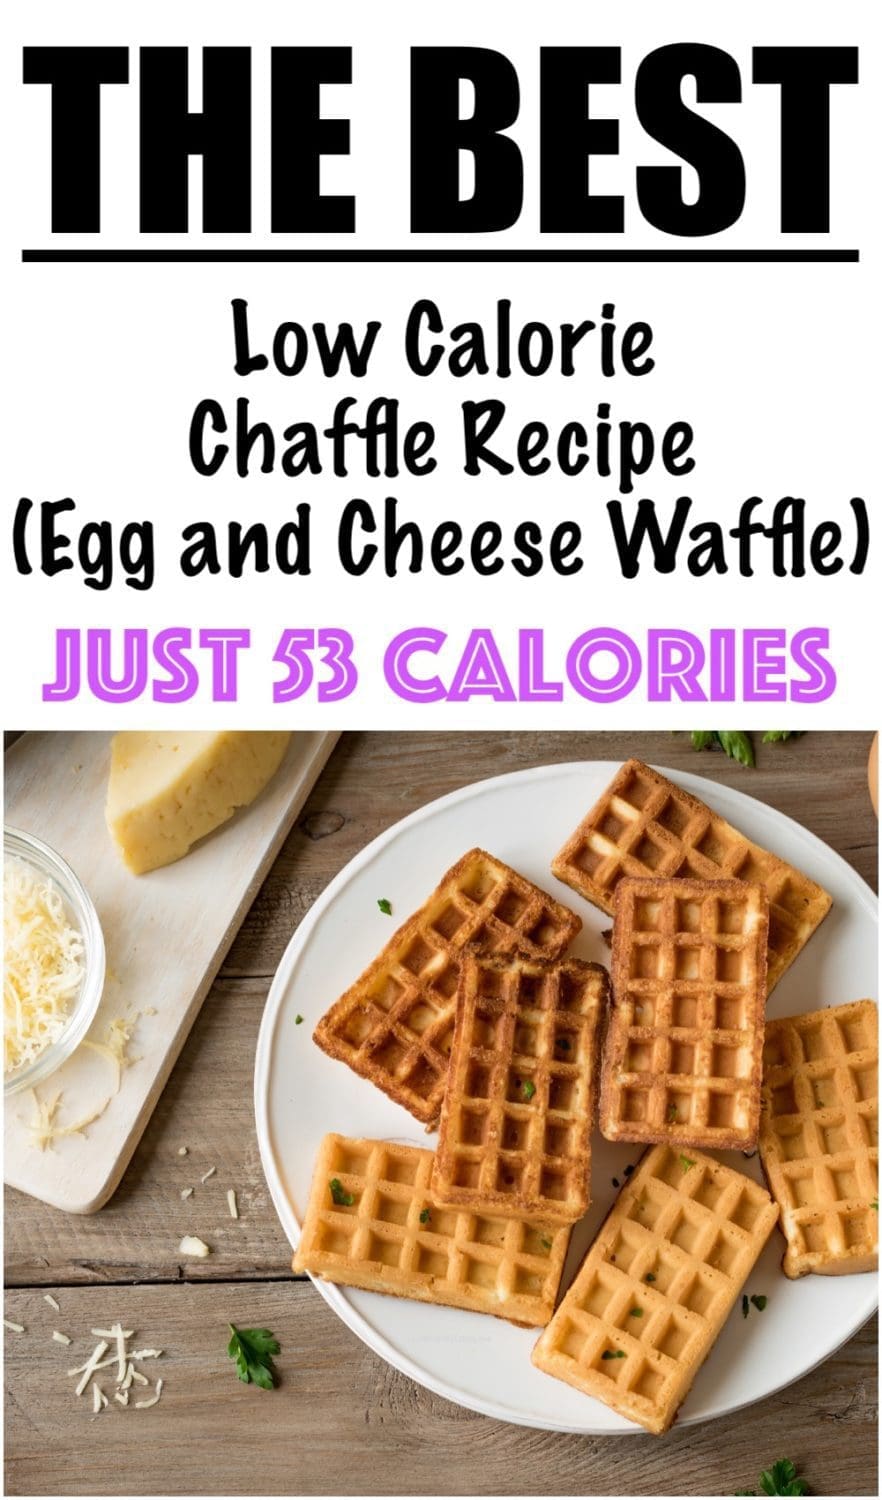 Low Calorie Chaffle Recipe